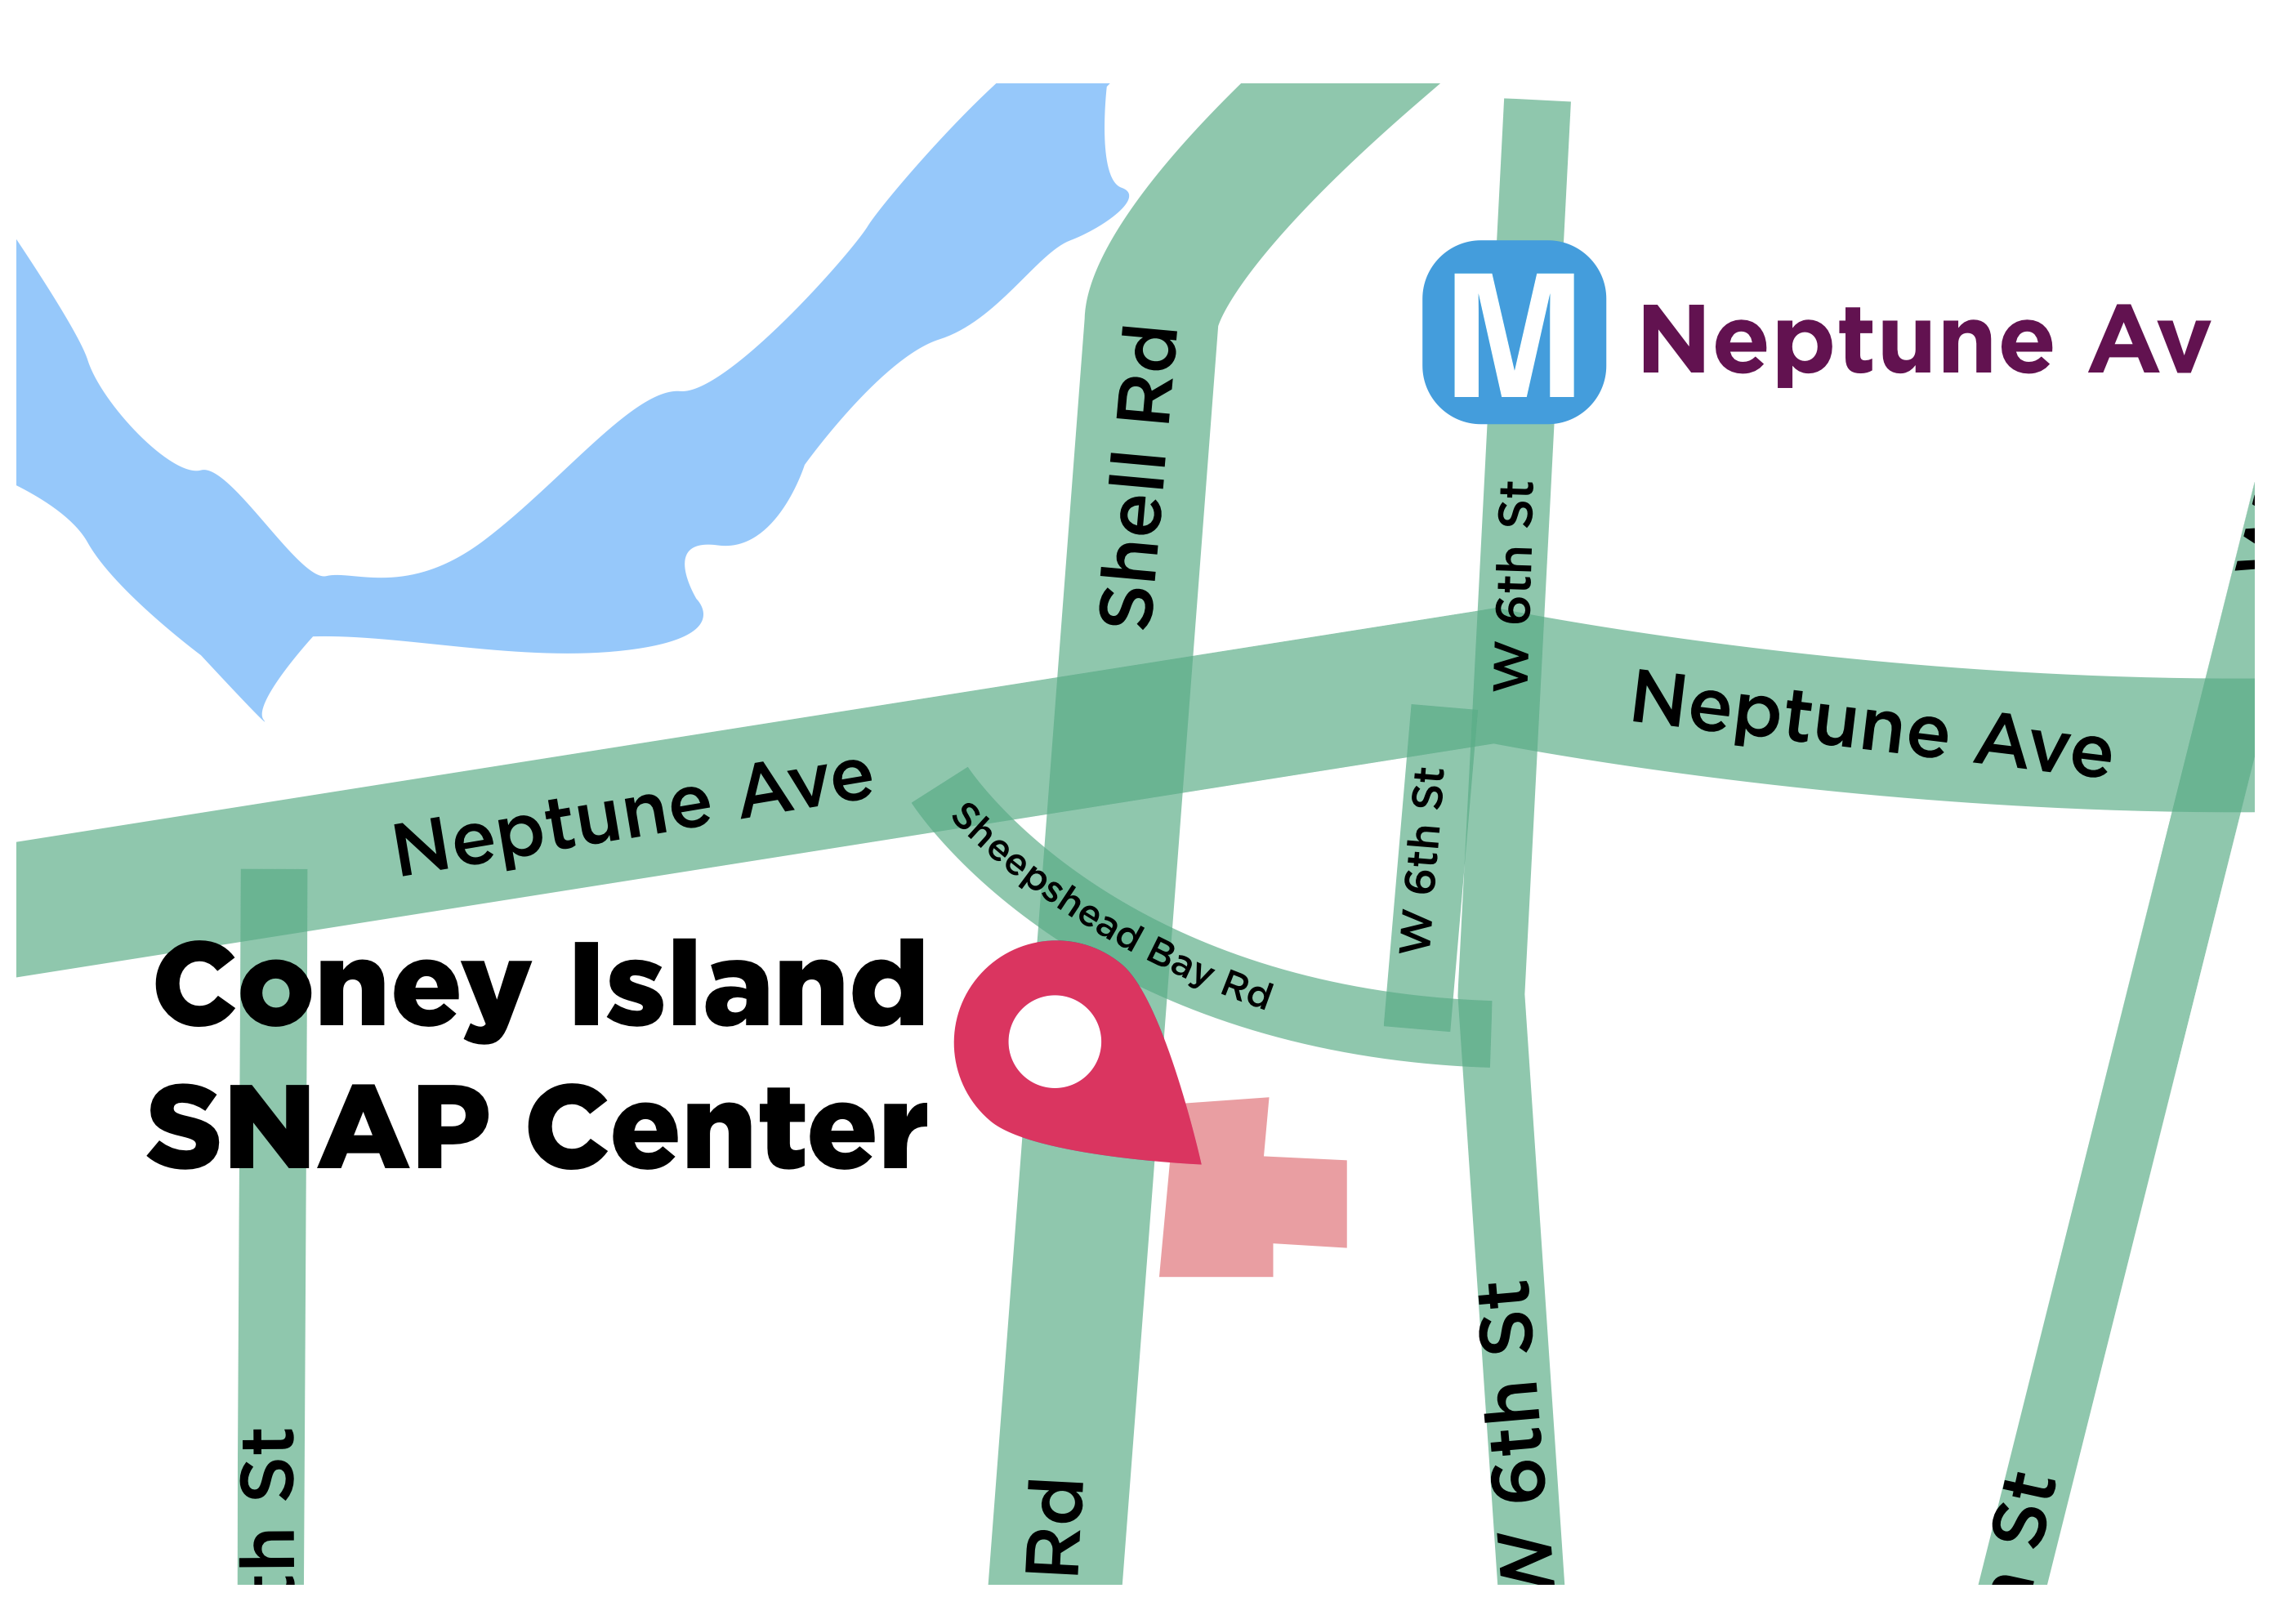 Coney Island SNAP Center